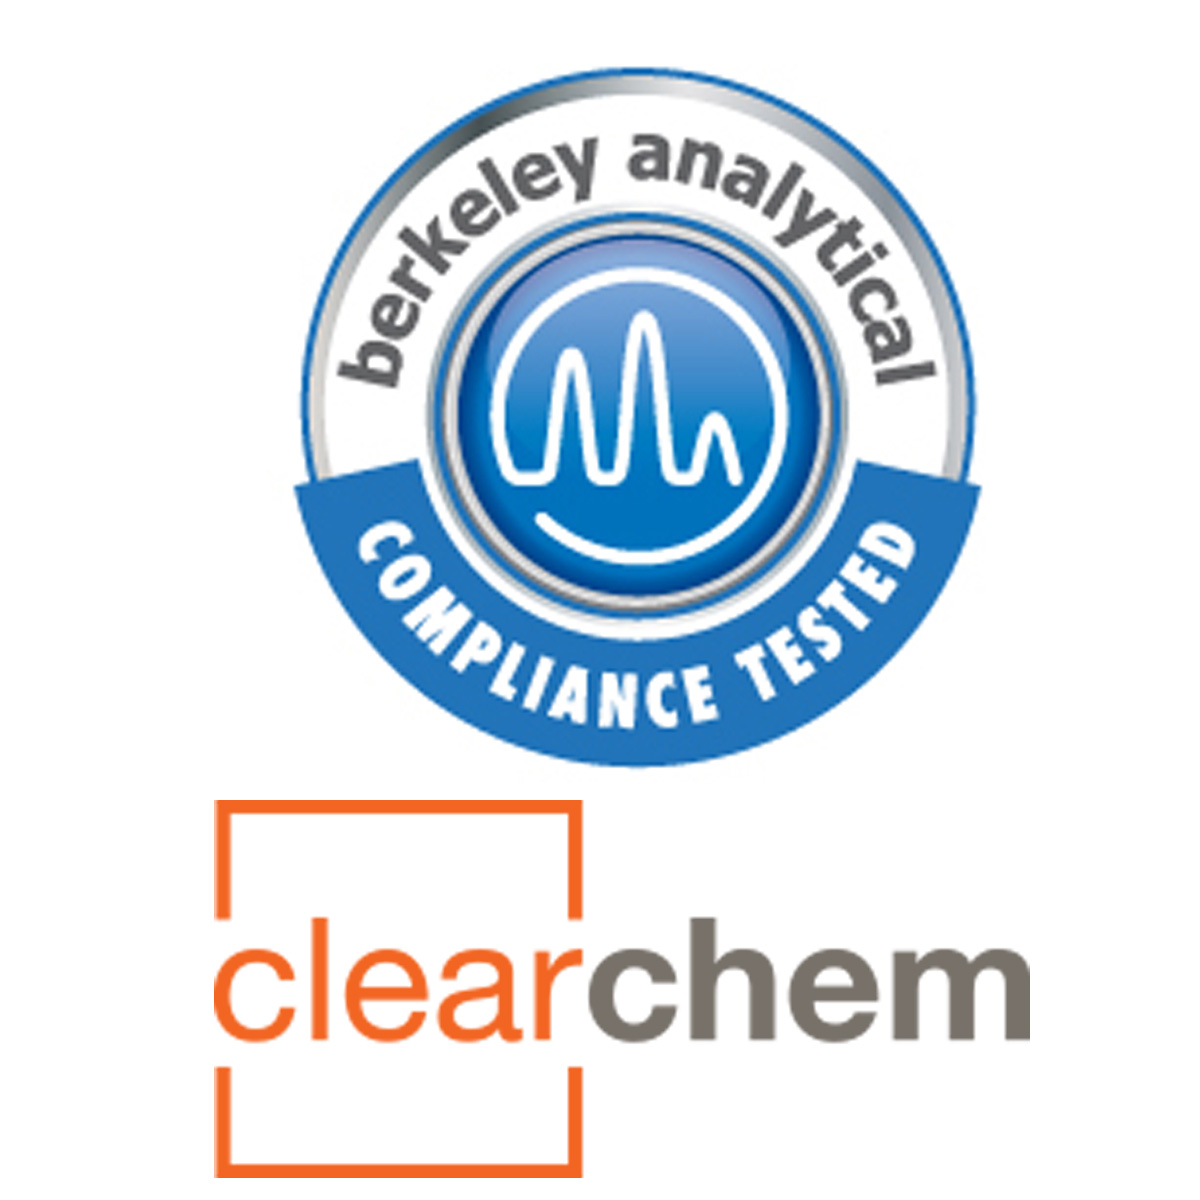 Berkley Analytical Compliance Tested logo